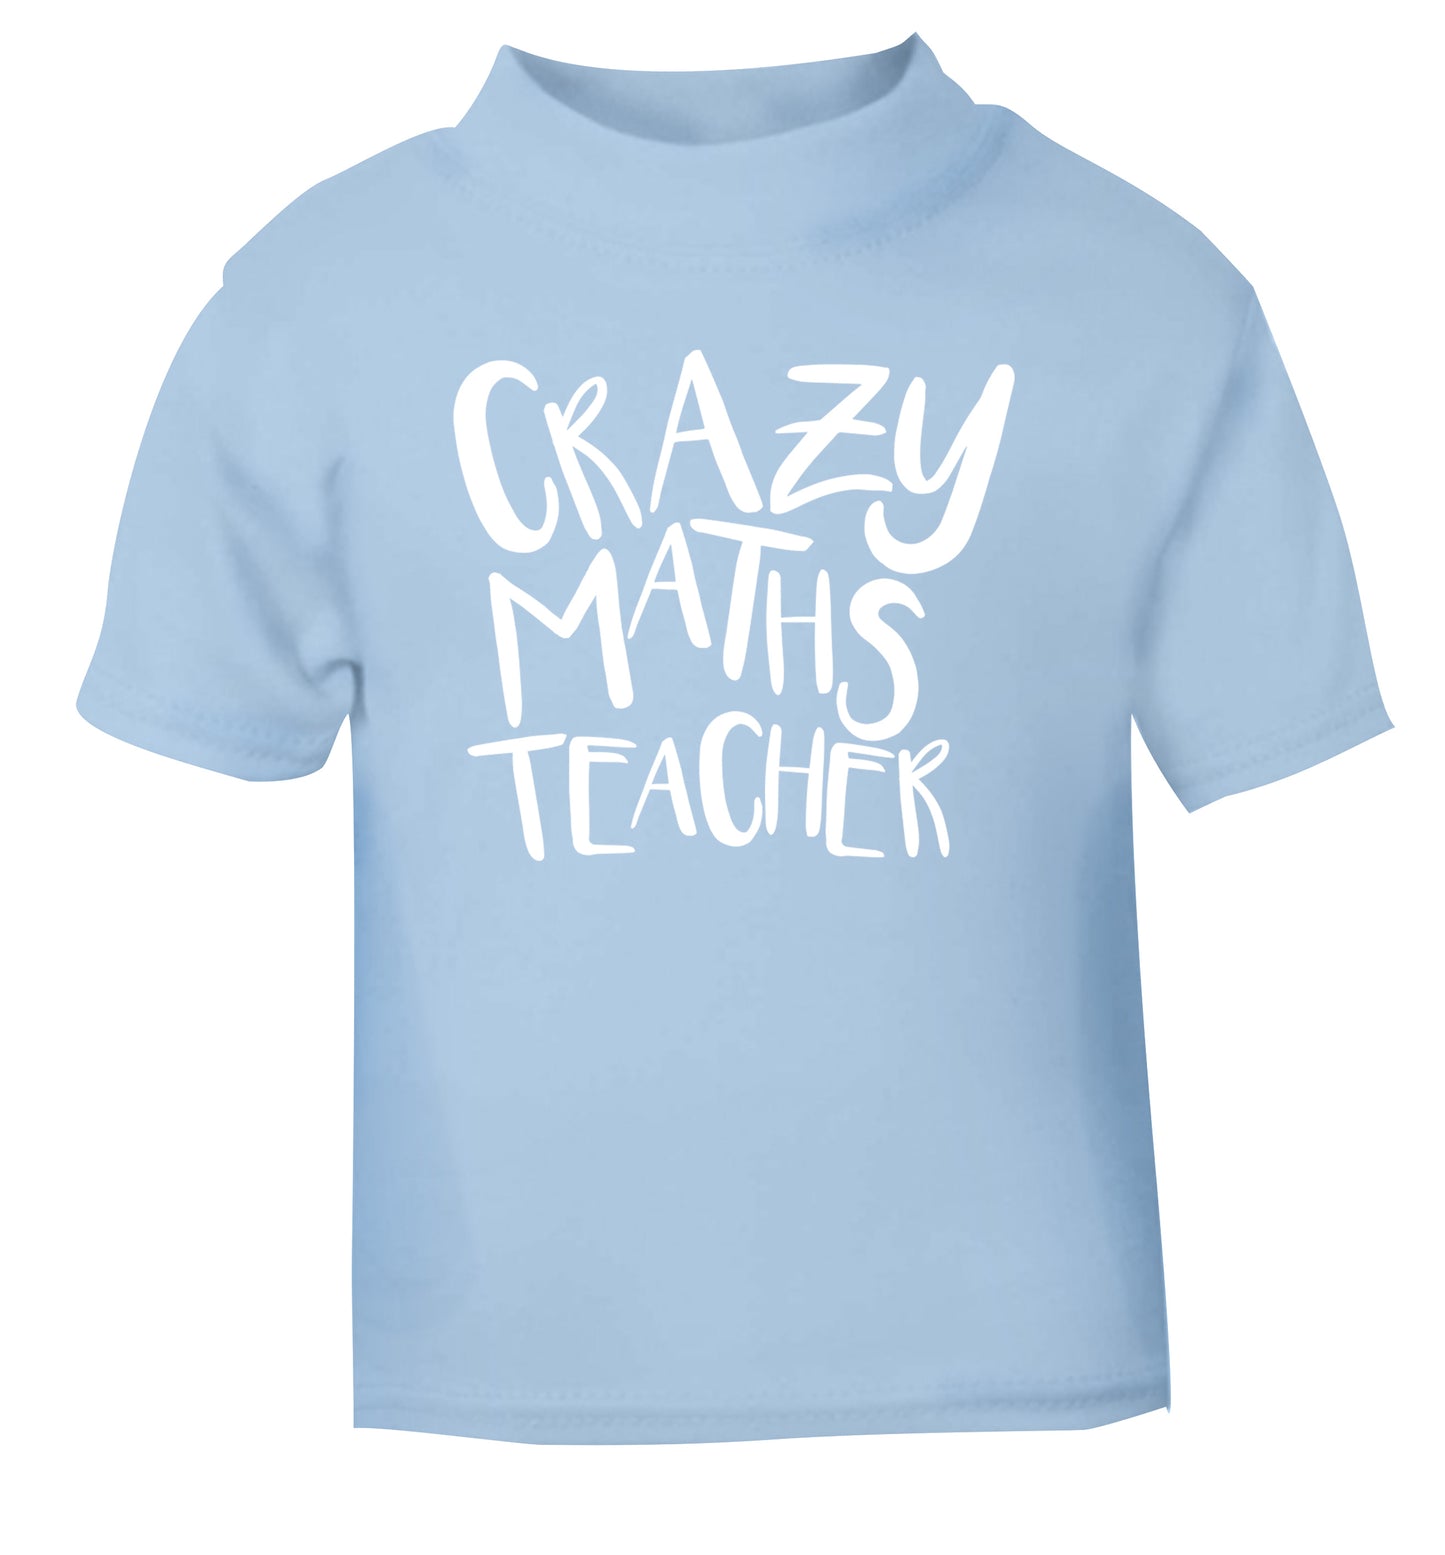 Crazy maths teacher light blue Baby Toddler Tshirt 2 Years